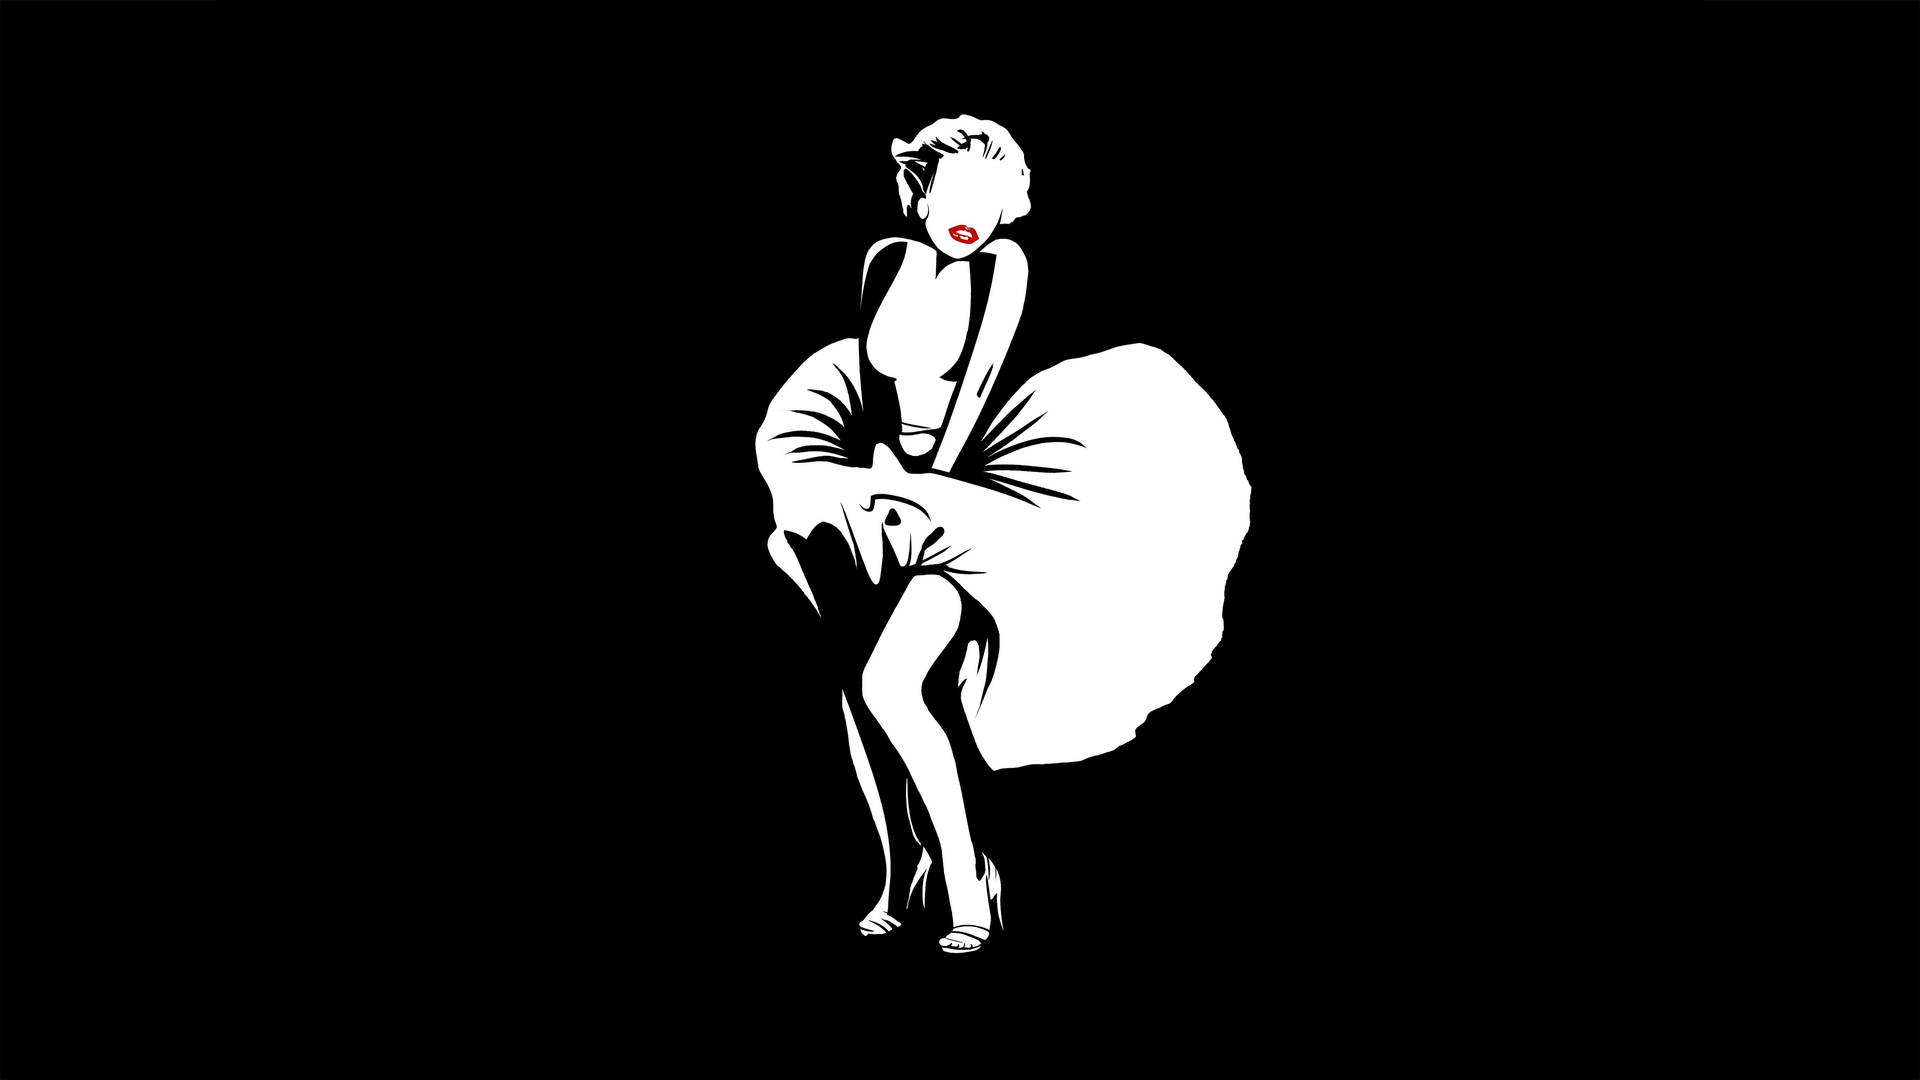 Marilyn Monroe Dress Dance Background